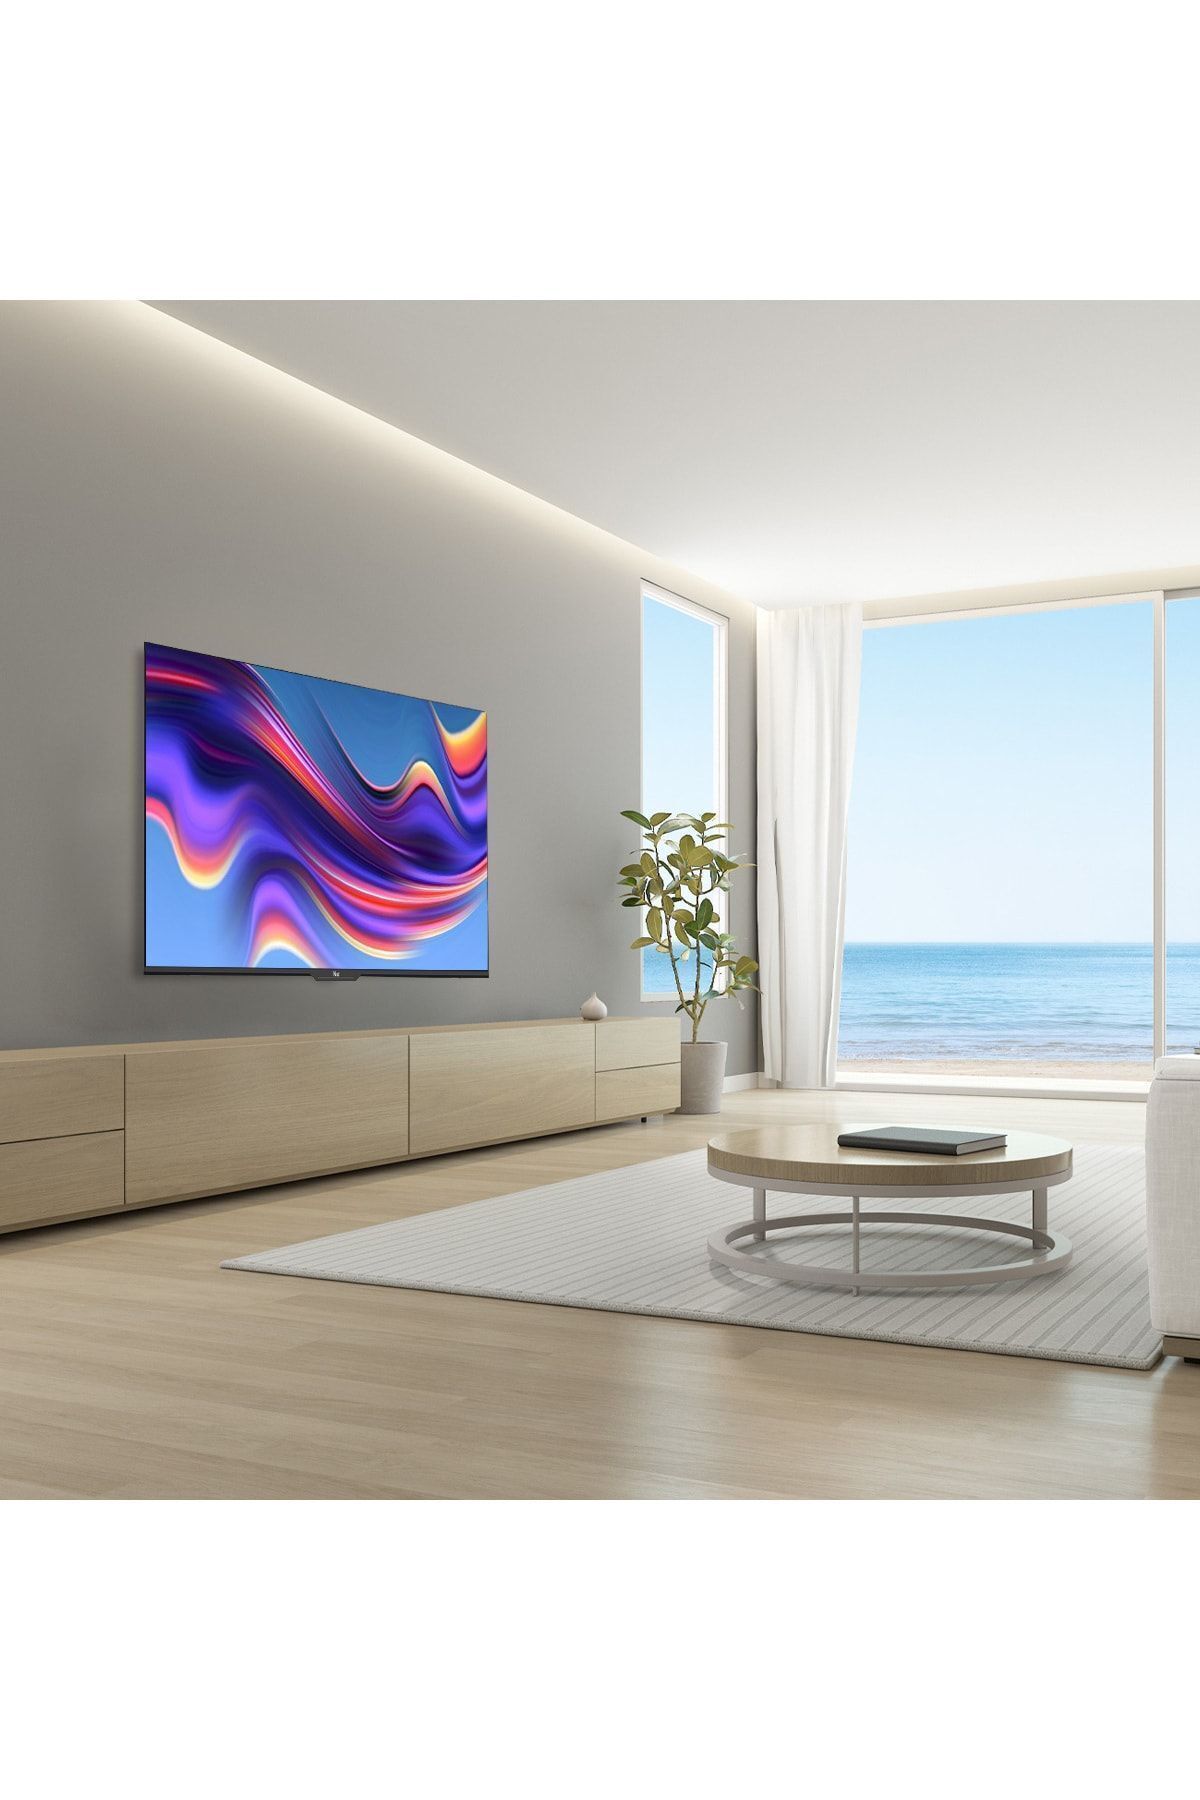 Next YE-55GFSG7 55" 139 Ekran Uydu Alıcılı 4K Ultra HD Google Android Smart LED TV